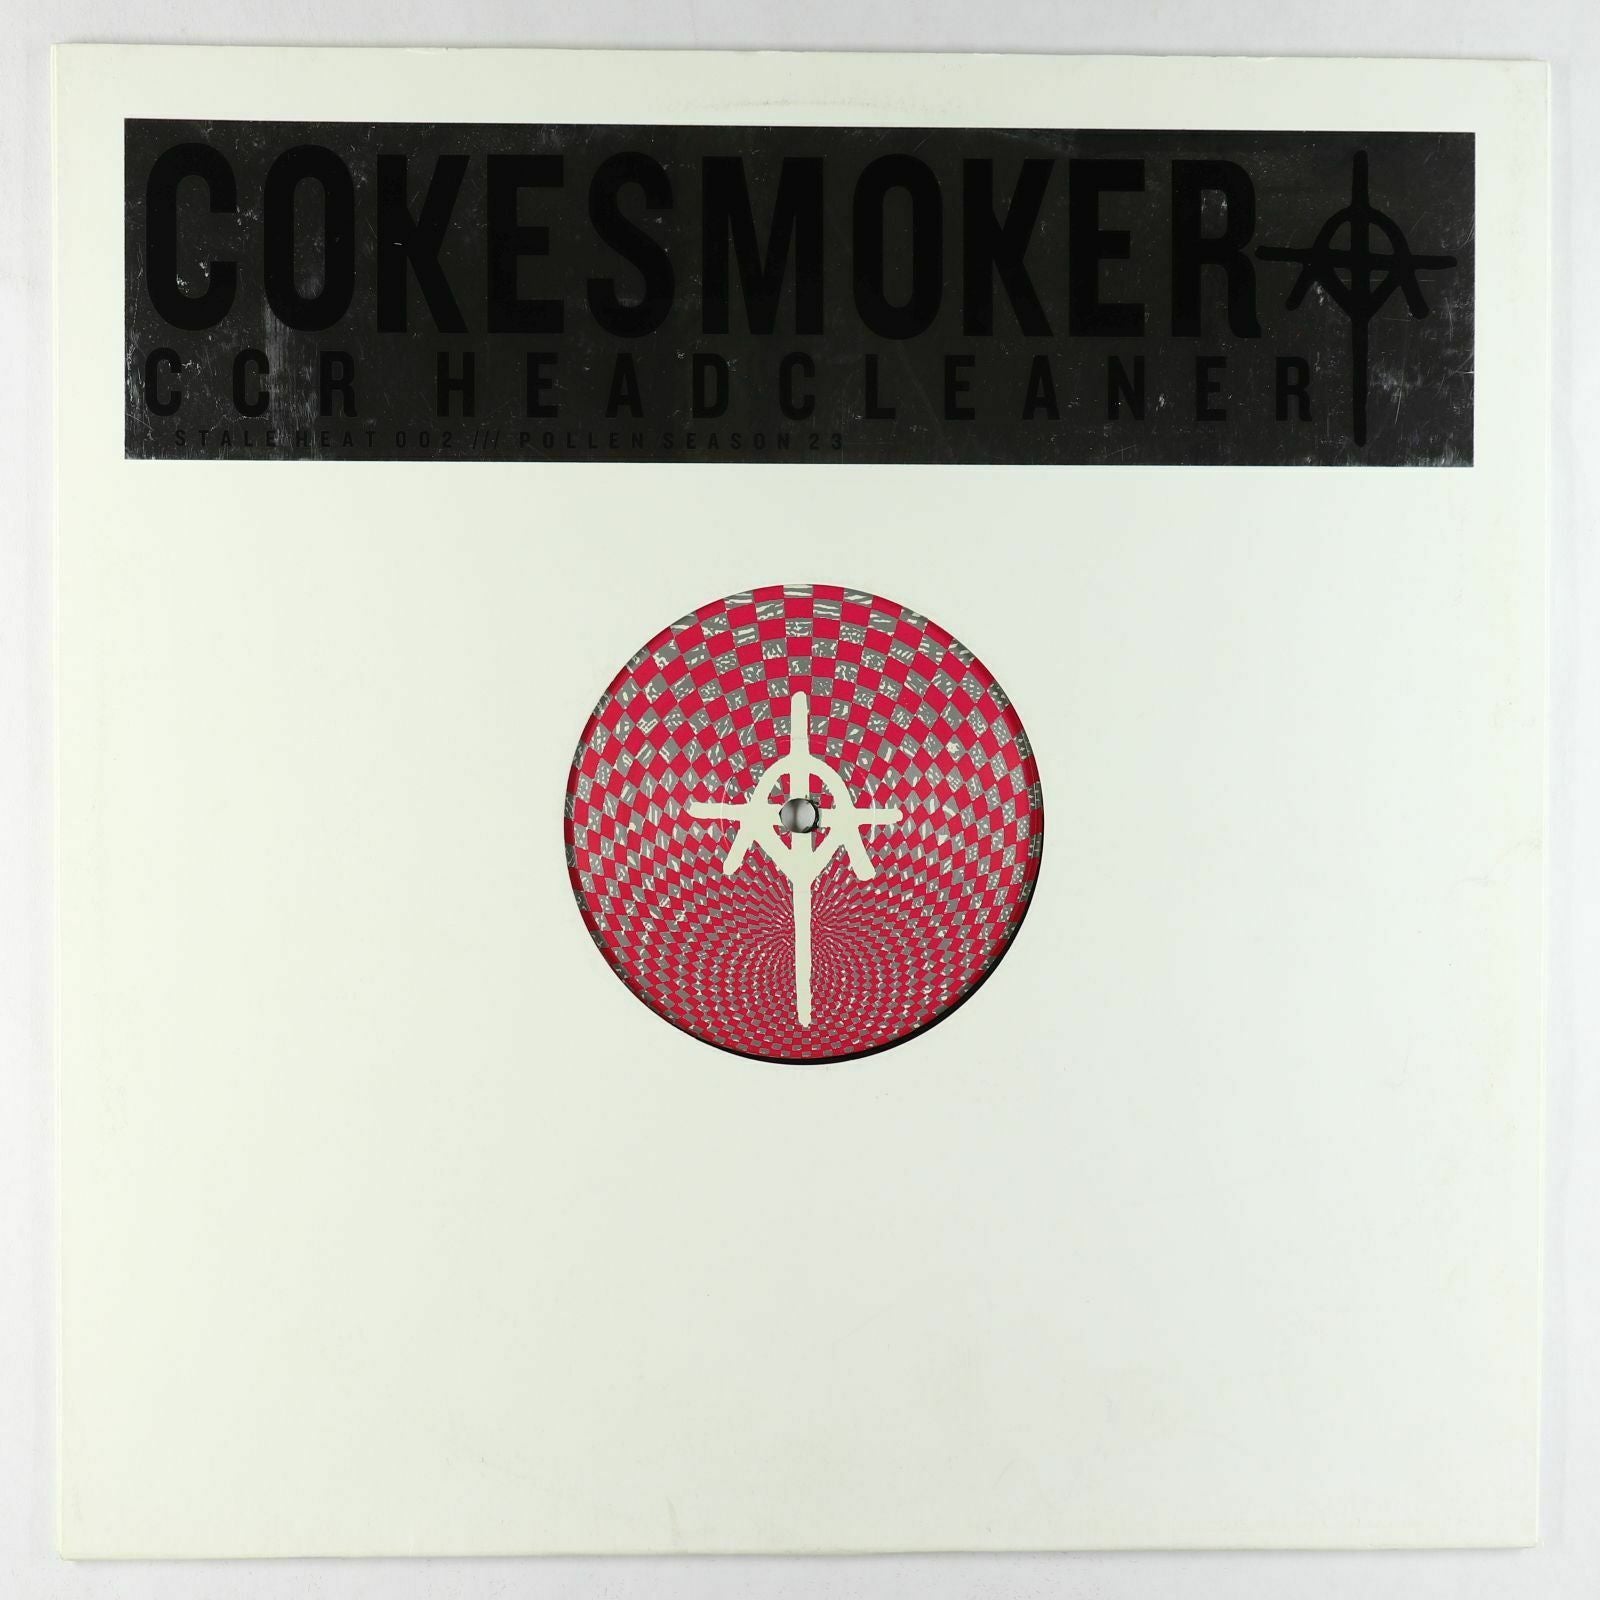 CCR Headcleaner ‎– Cokesmoker - New Ep Record 2015 Pollen Season / Stale Heat USA Vinyl - Noise Rock